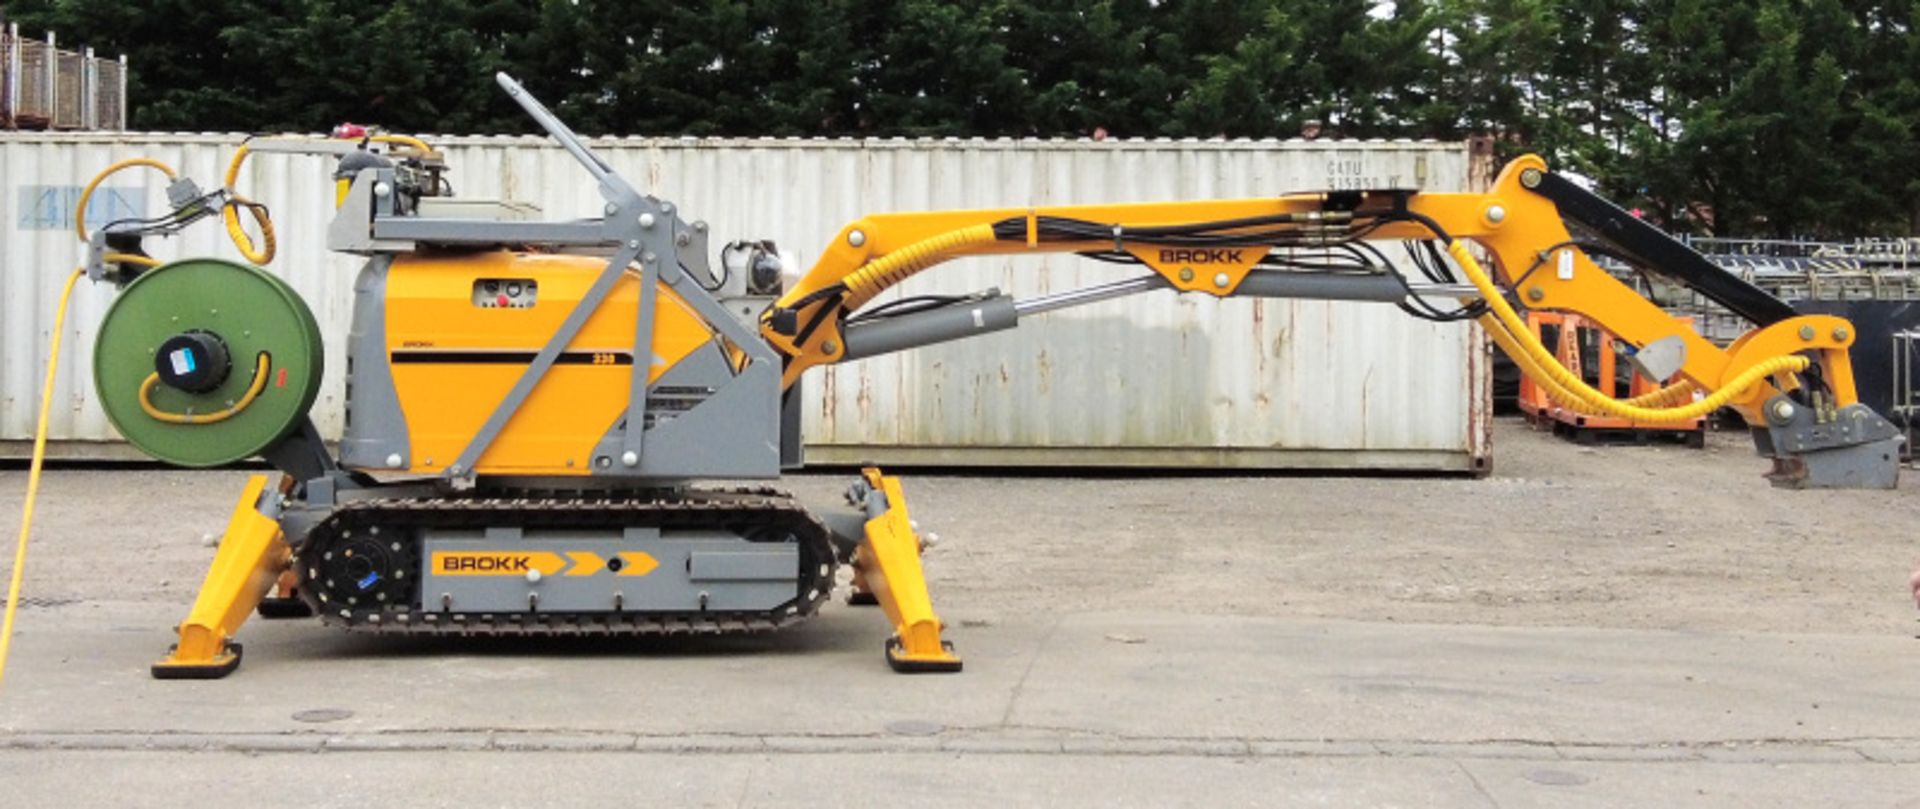 Brokk 330 Robotic Demolition Machine with attachments & accessories (see description) - Image 11 of 93